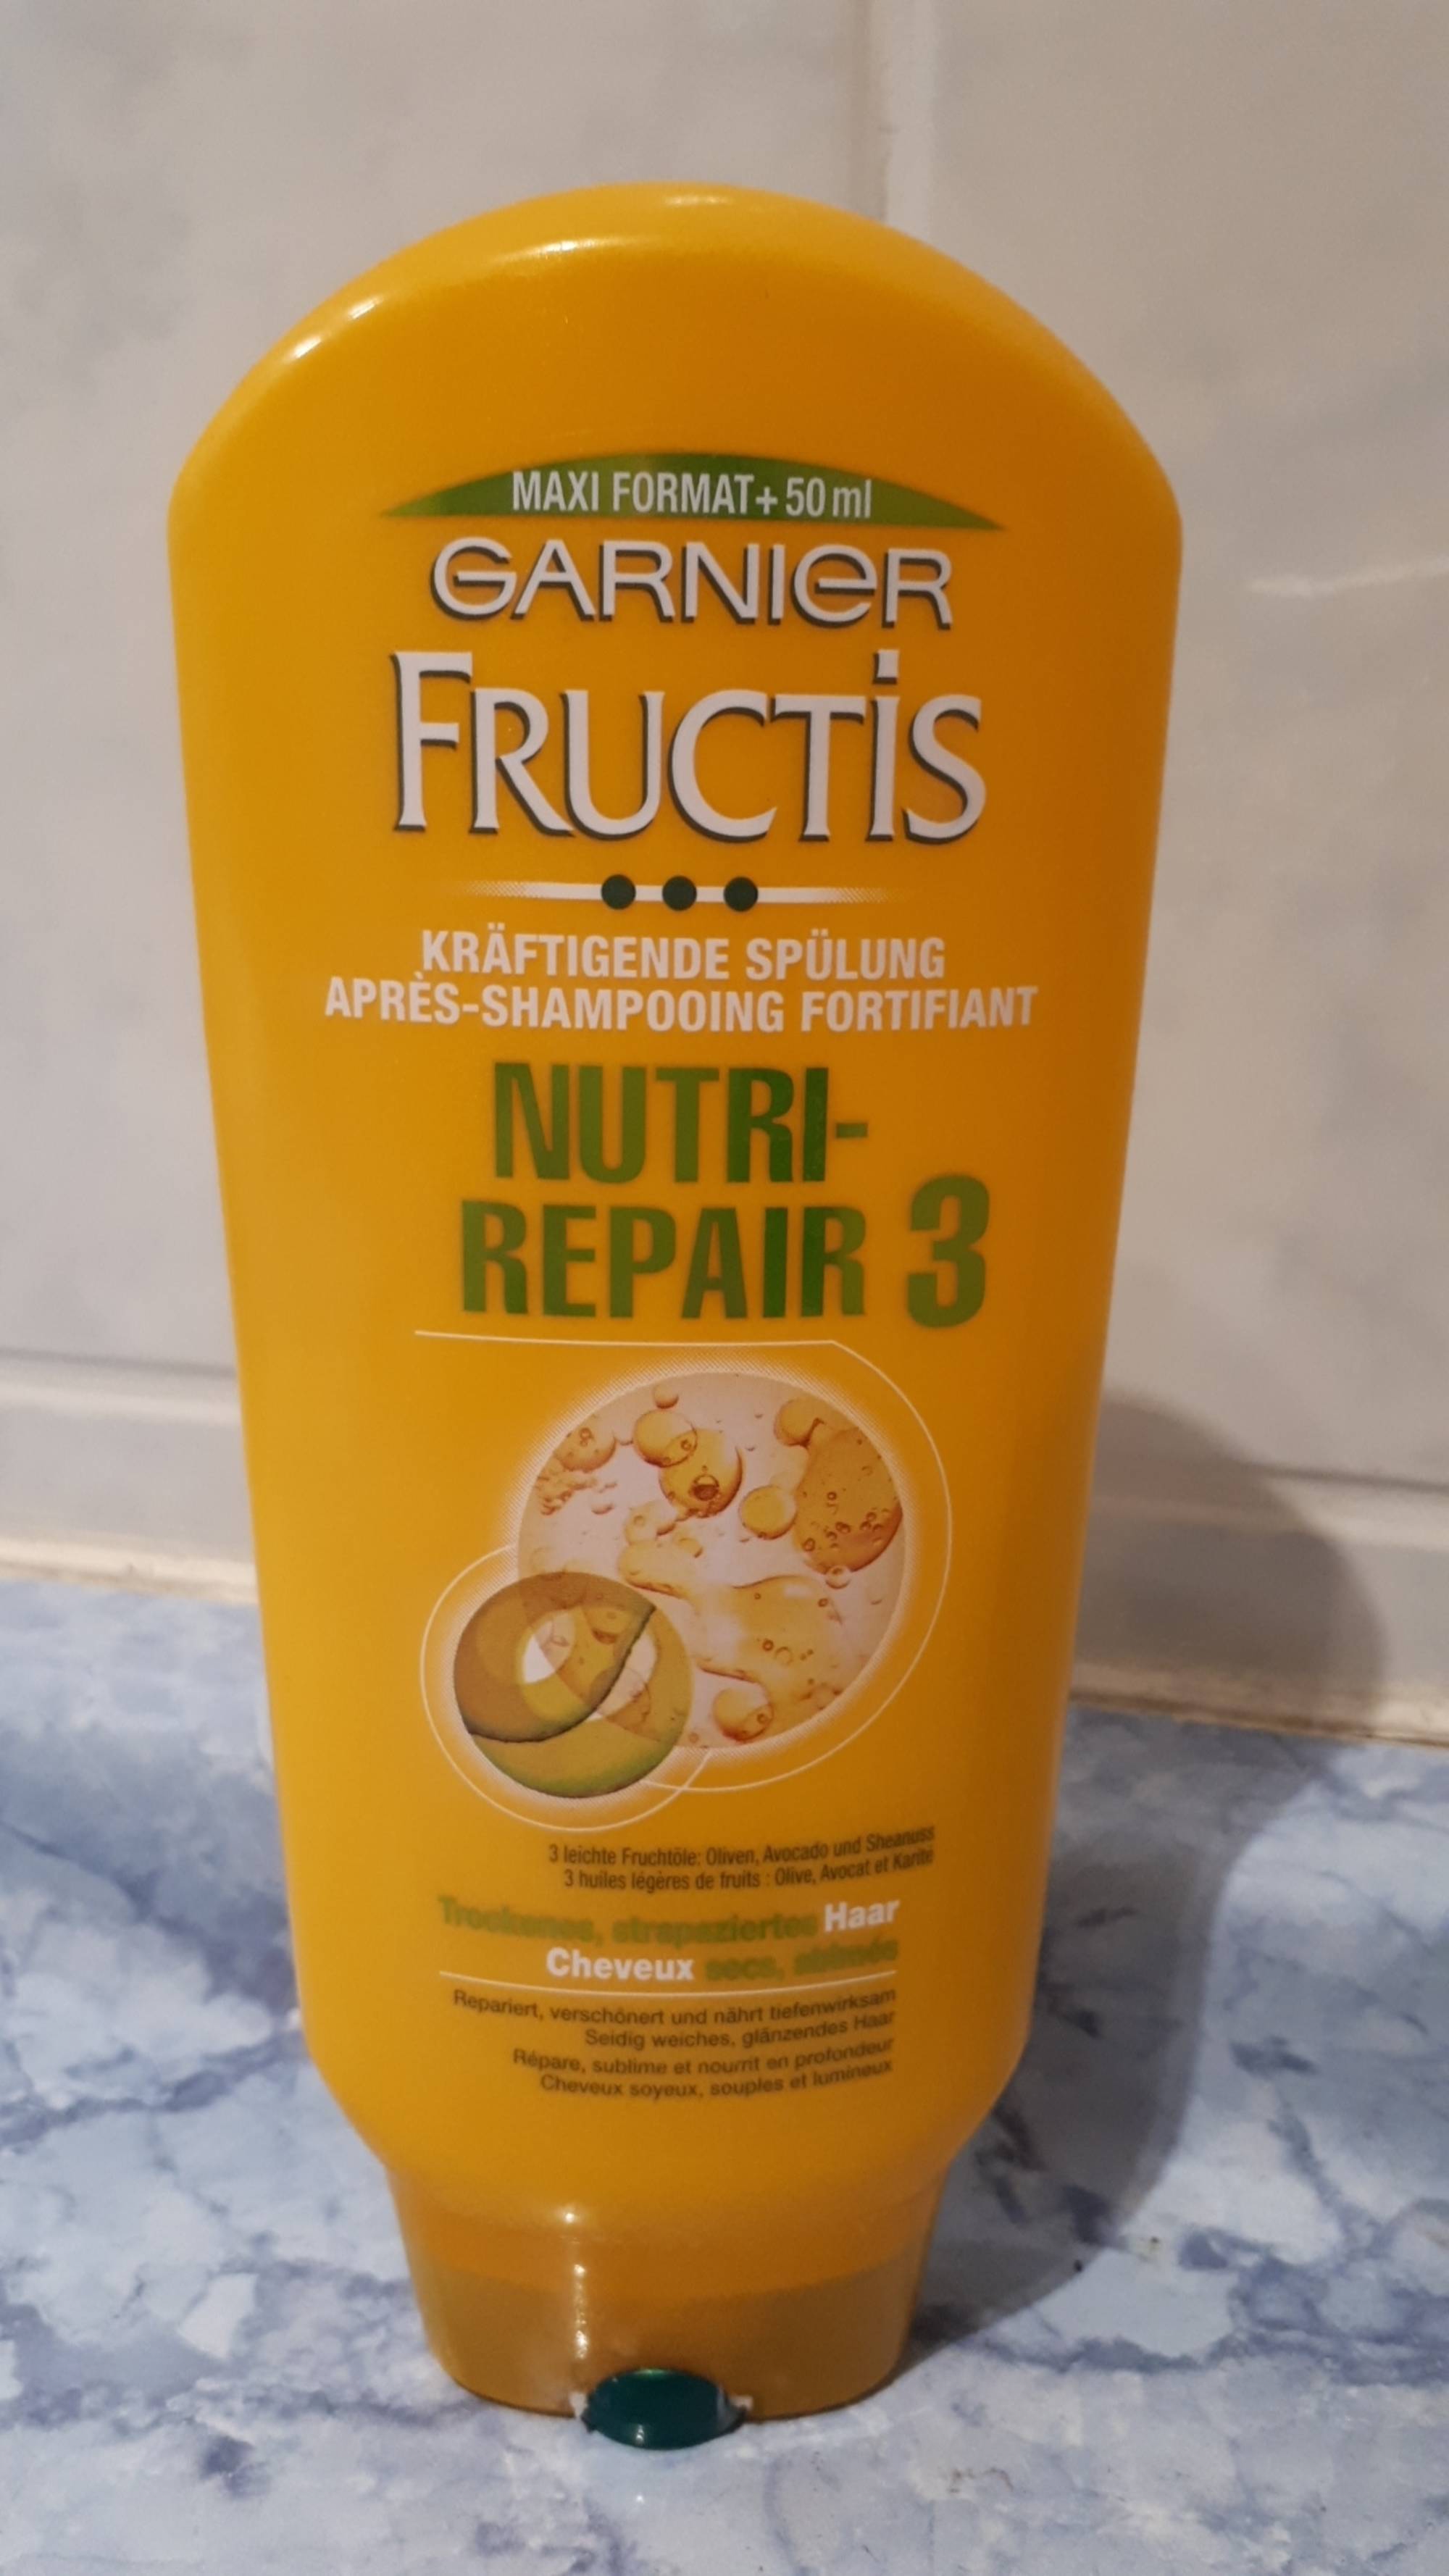 GARNIER - Fructis nutri-repair 3 - Après-shampooing fortifiant 